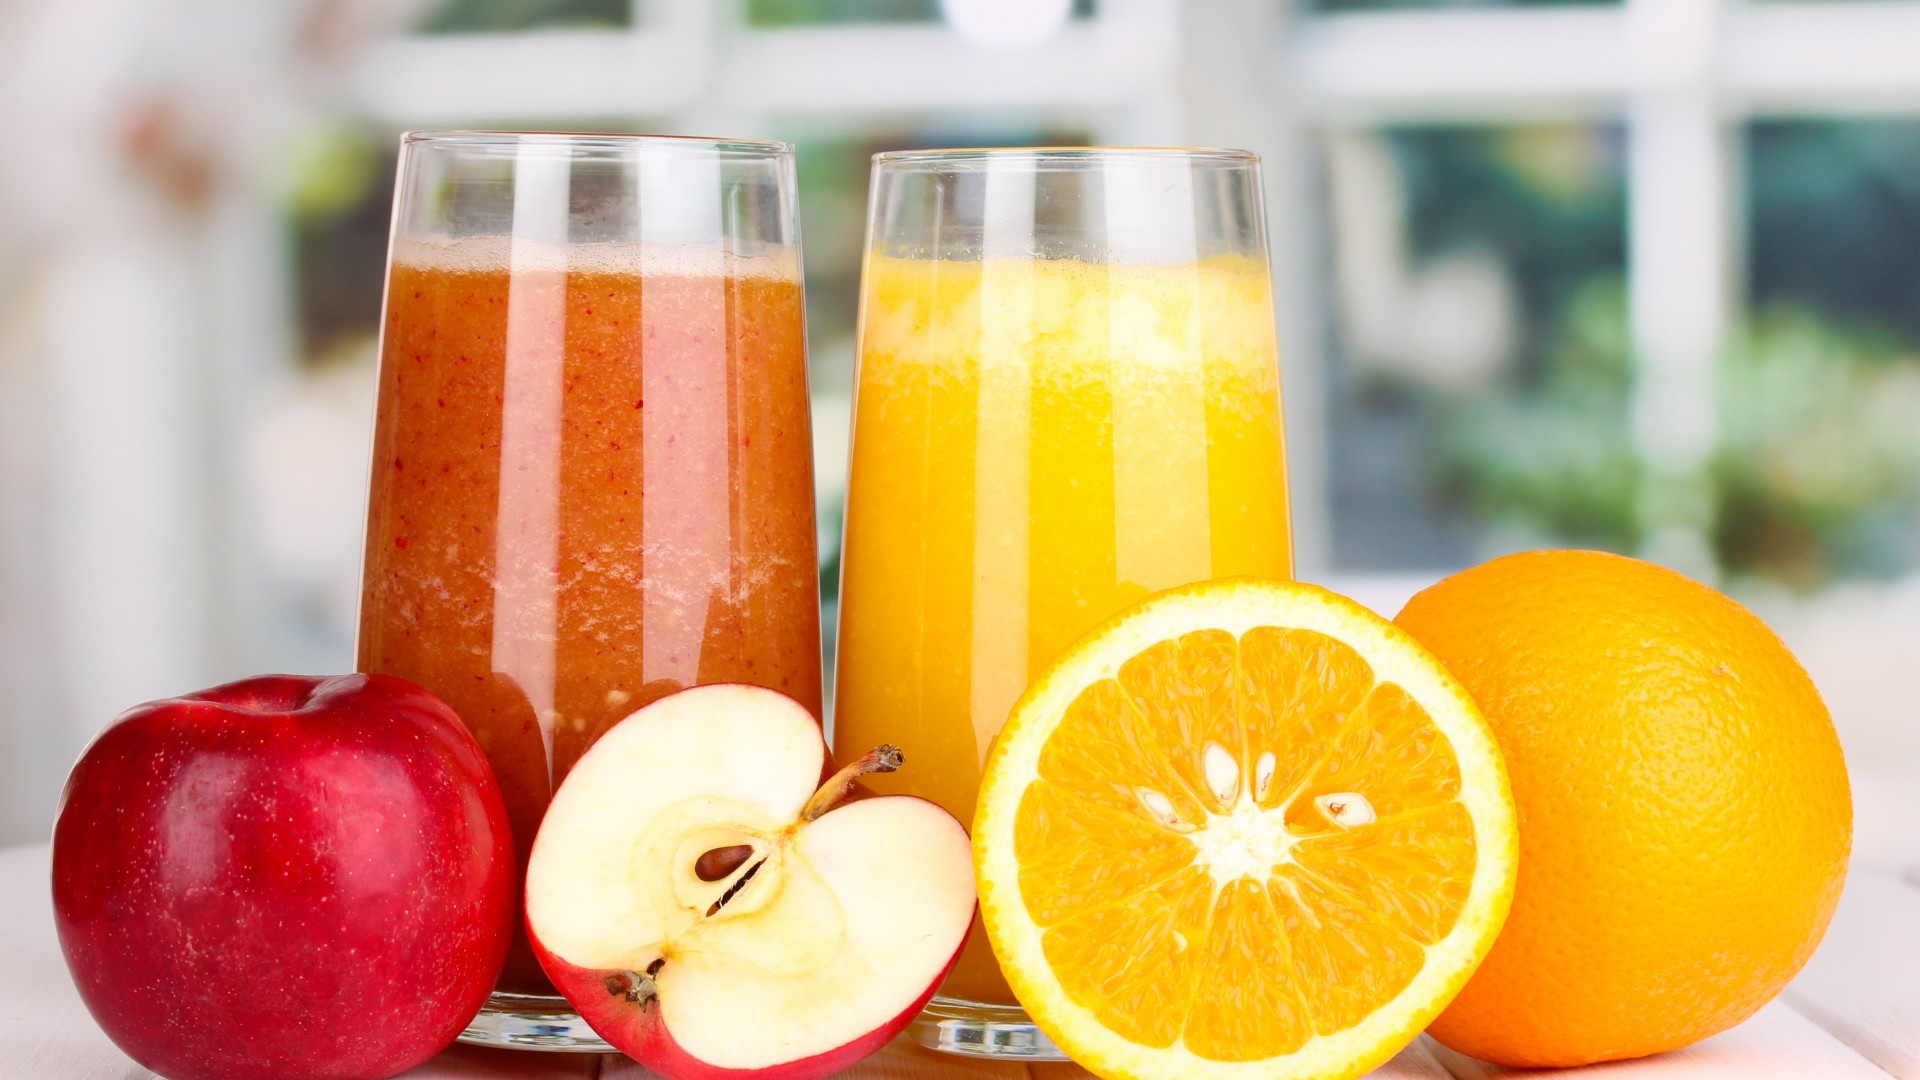 Fresh fruit union, Glass of goodness, Vibrant refreshment, Apple and orange delight, 1920x1080 Full HD Desktop